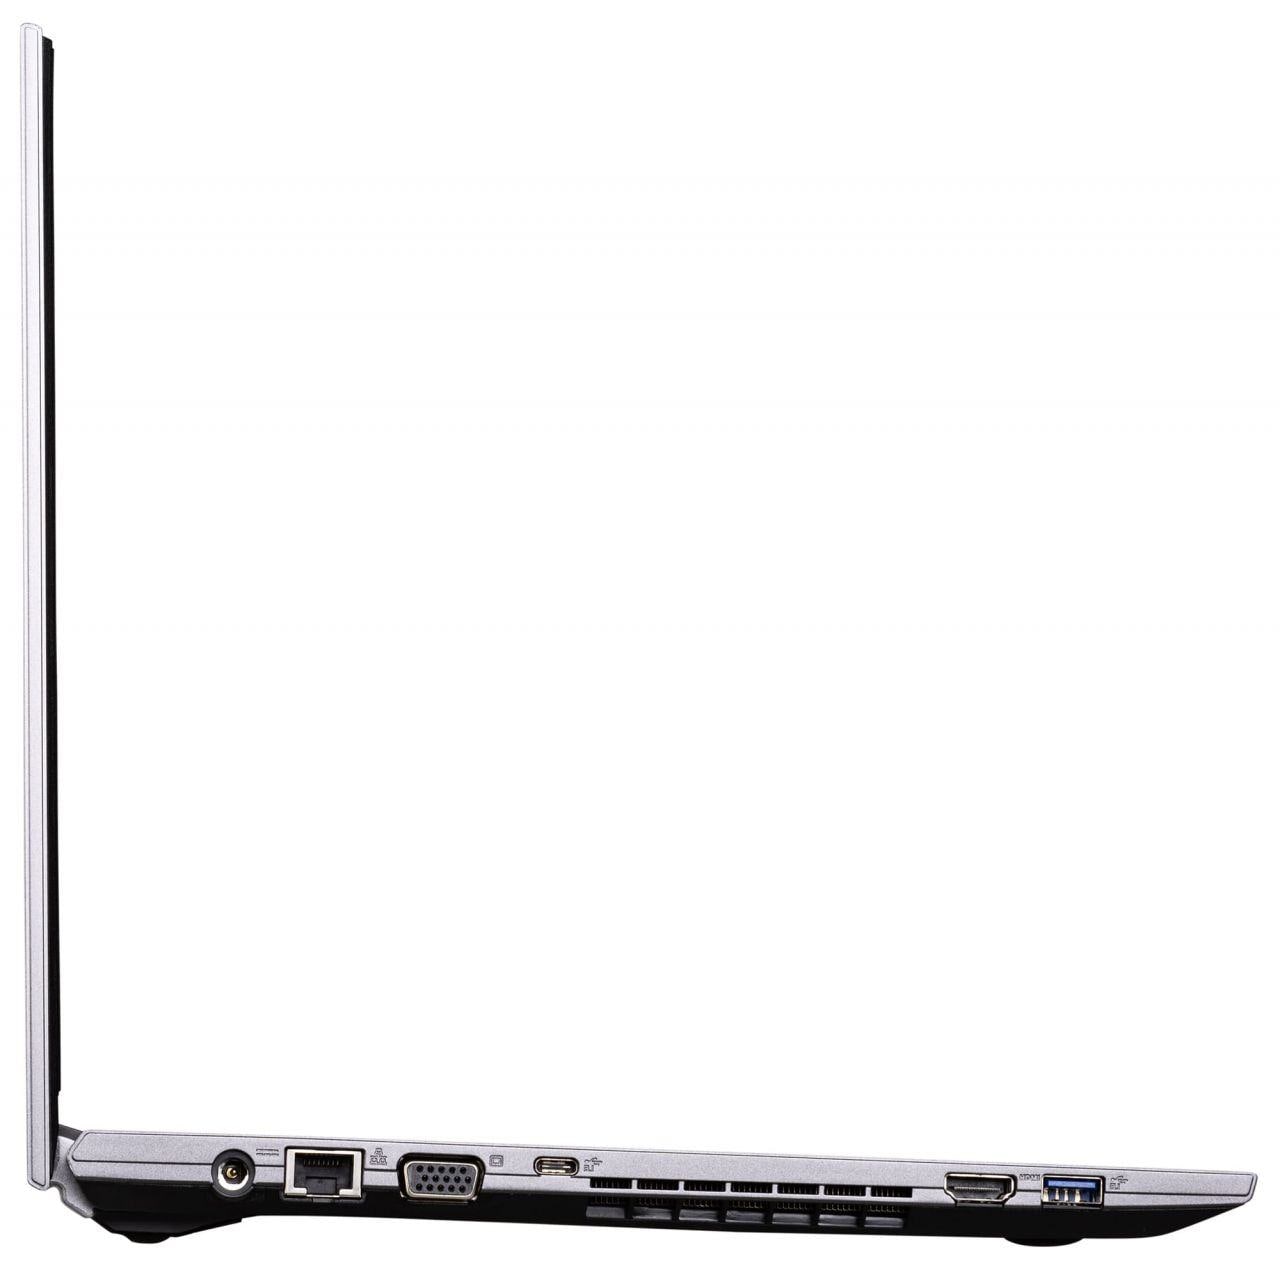 CAPTIVA Business-Notebook »Power Starter I69-693«, 39,6 cm, / 15,6 Zoll, Intel, Core i3, 250 GB SSD